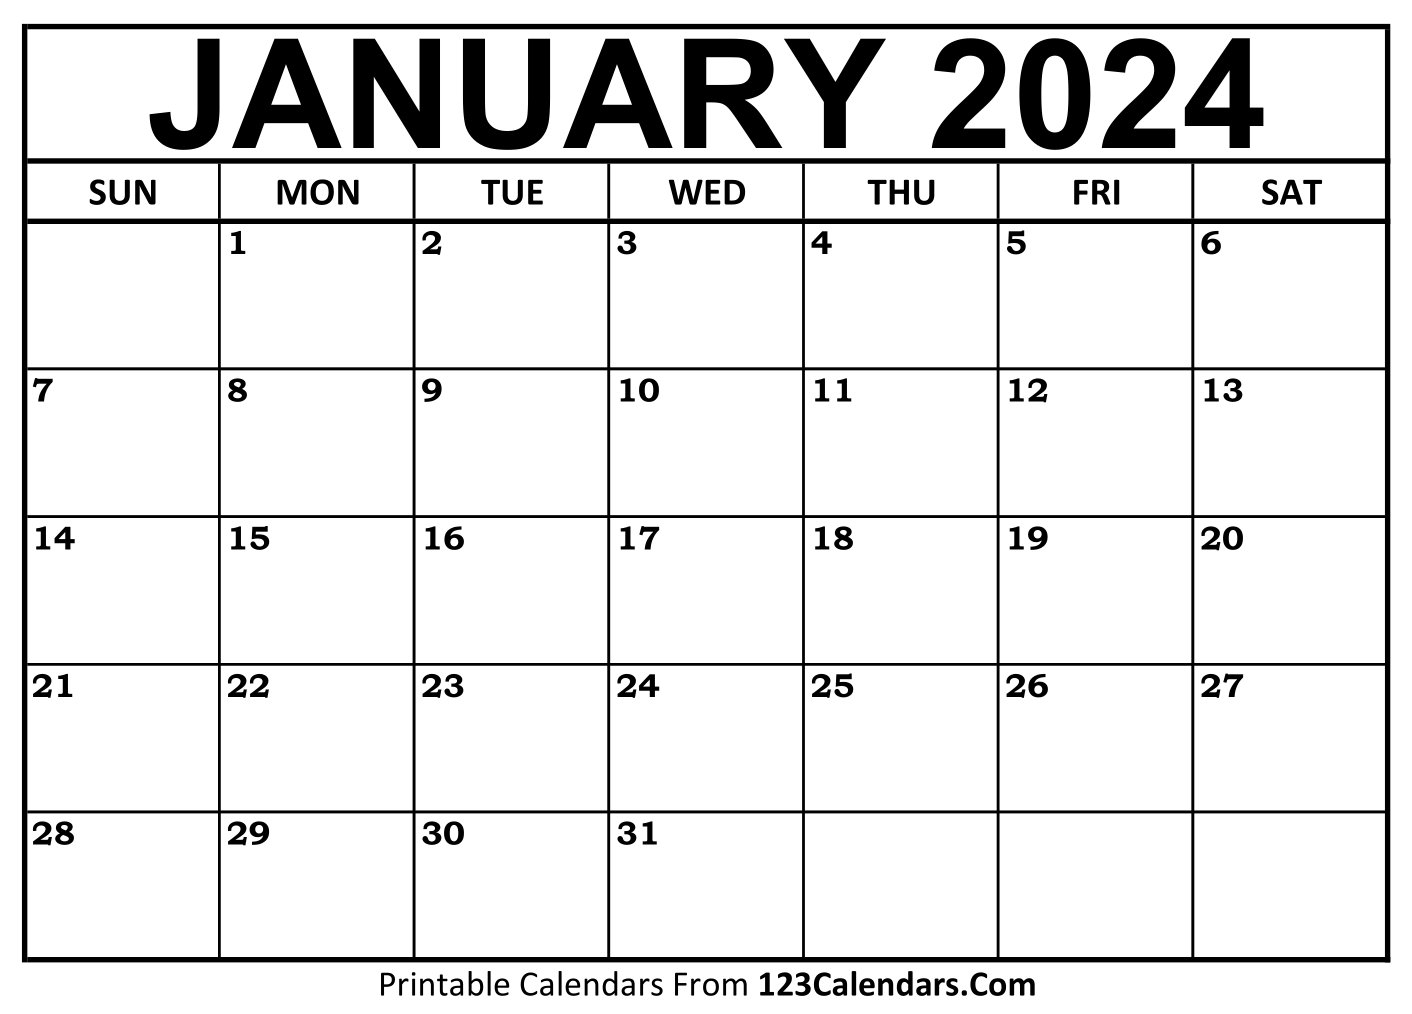 Printable January 2024 Calendar Templates - 123Calendars for Printable January 2024 Calendar Printable